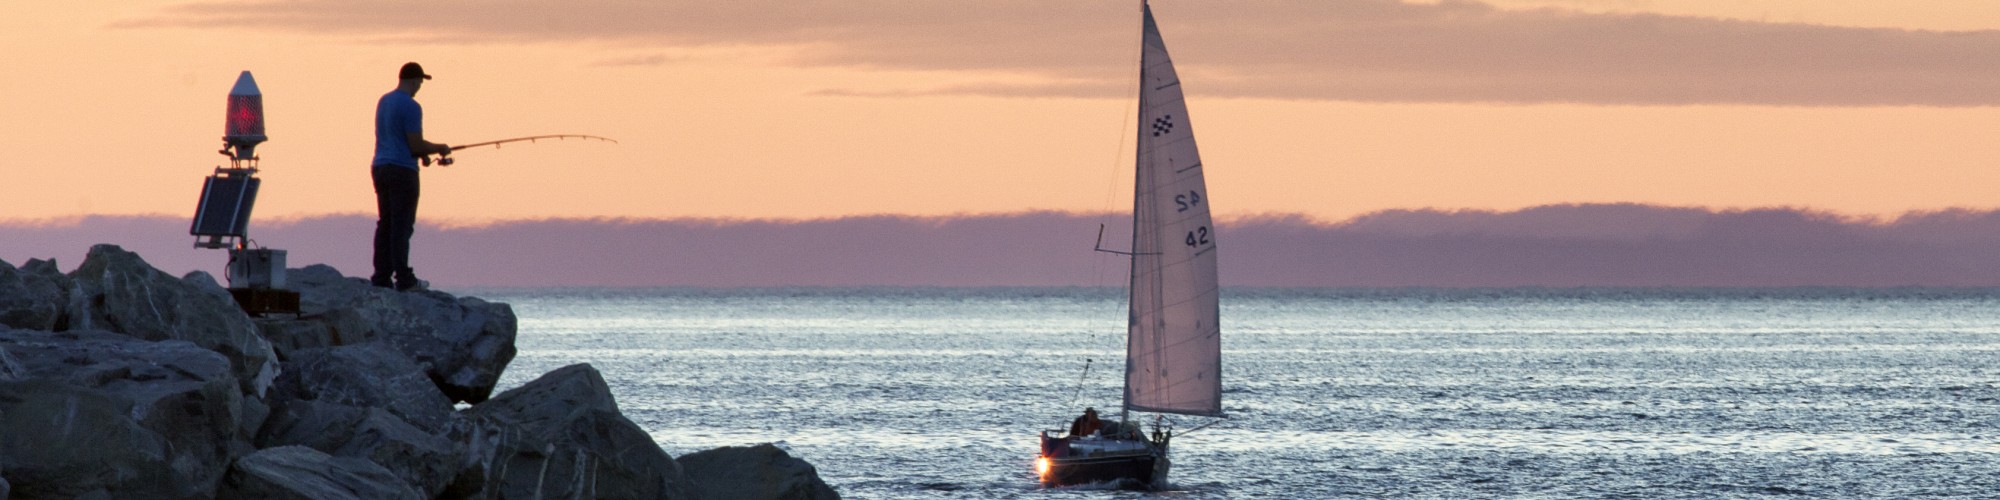 Fisherman by the sea, sailboat on the horizon